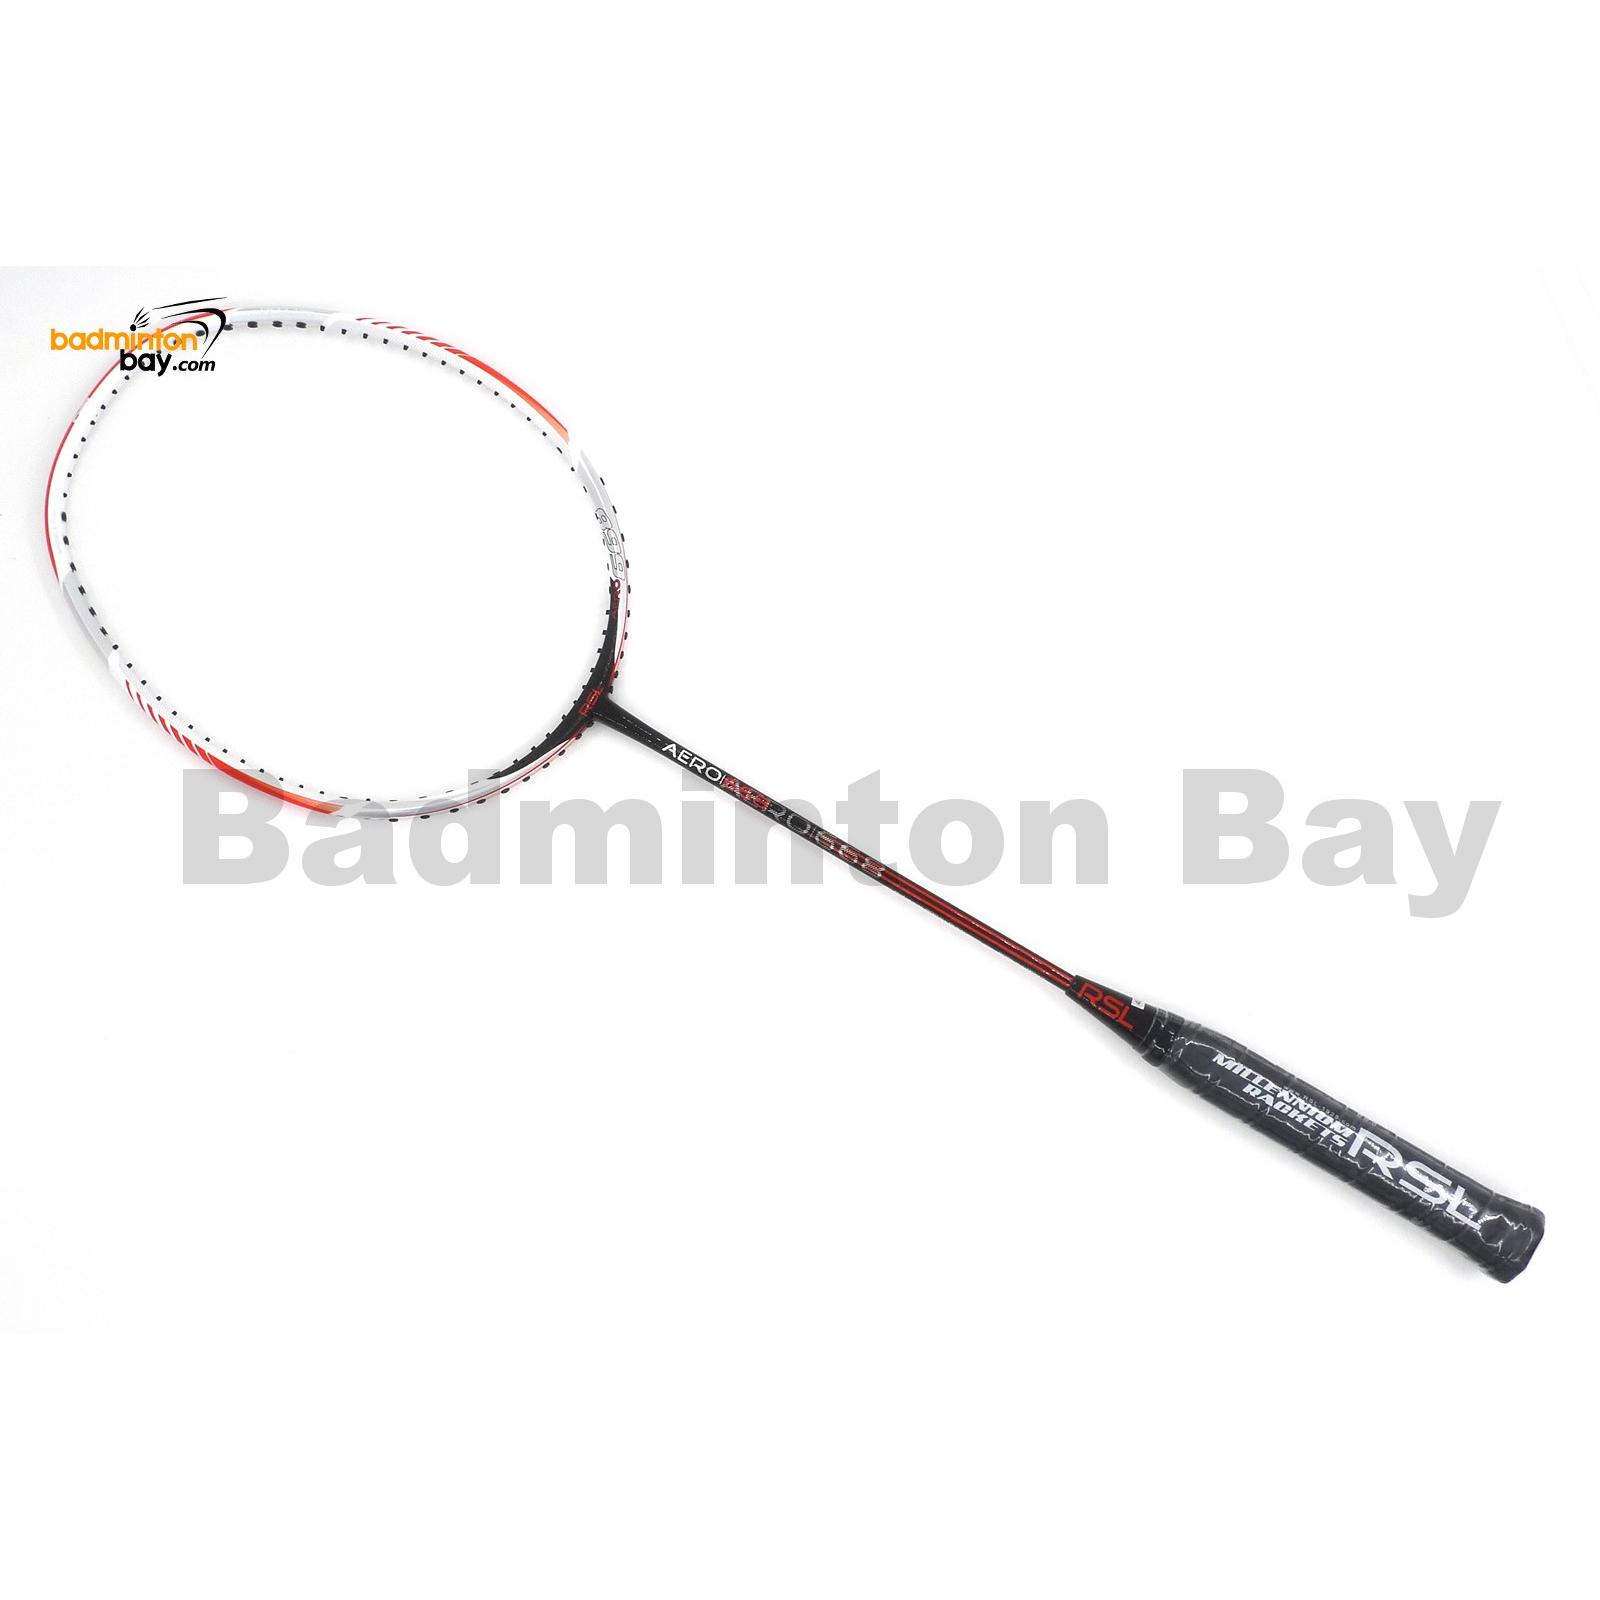 Afvige Mania maternal RSL Aero 668 Badminton Racket (4U-G5)